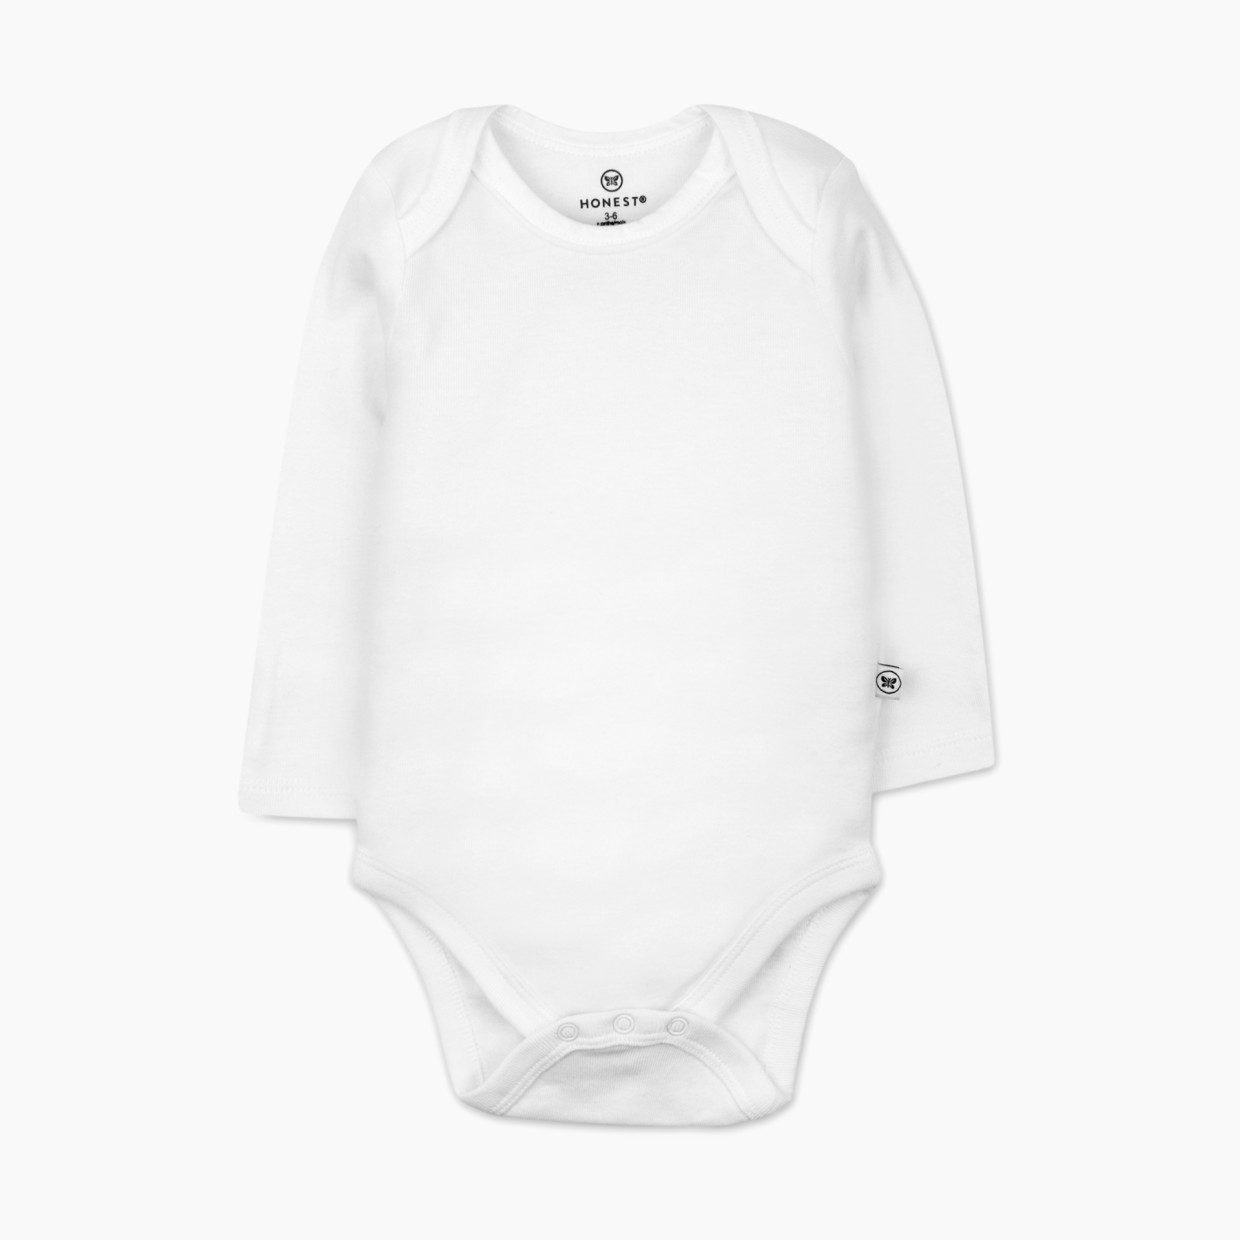 Honest Baby Clothing 10-Pack Organic Cotton Long Sleeve Bodysuits - Bright White, 6-9 M, 10.